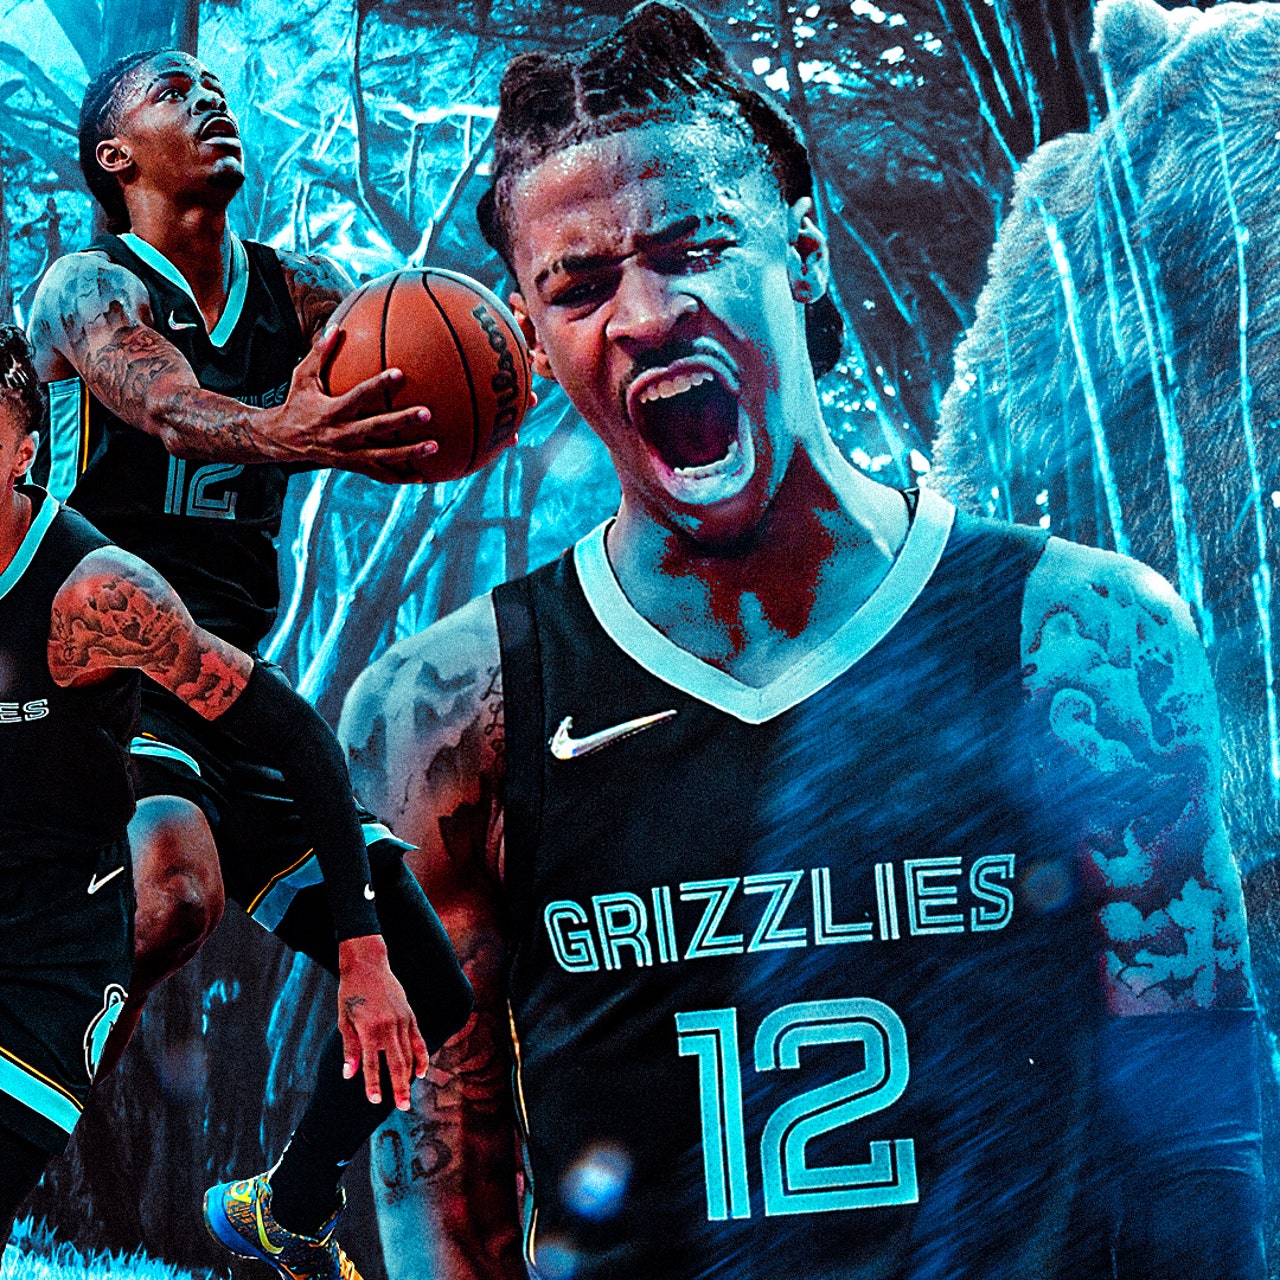 Memphis Grizzlies Ja Morant 12 2021 NBA New Arrival Teal jersey in